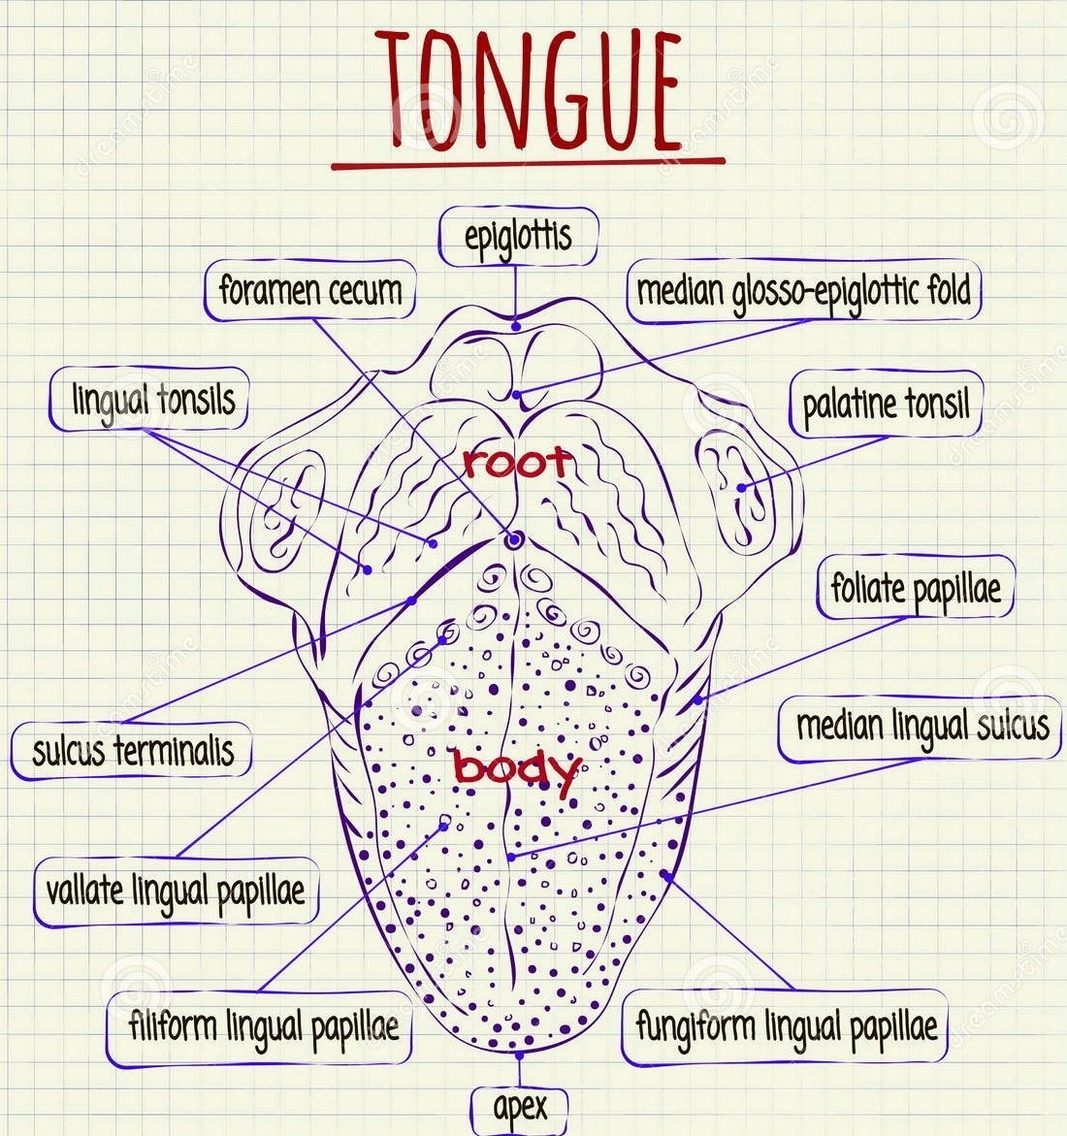 Tongue anatomy diagram